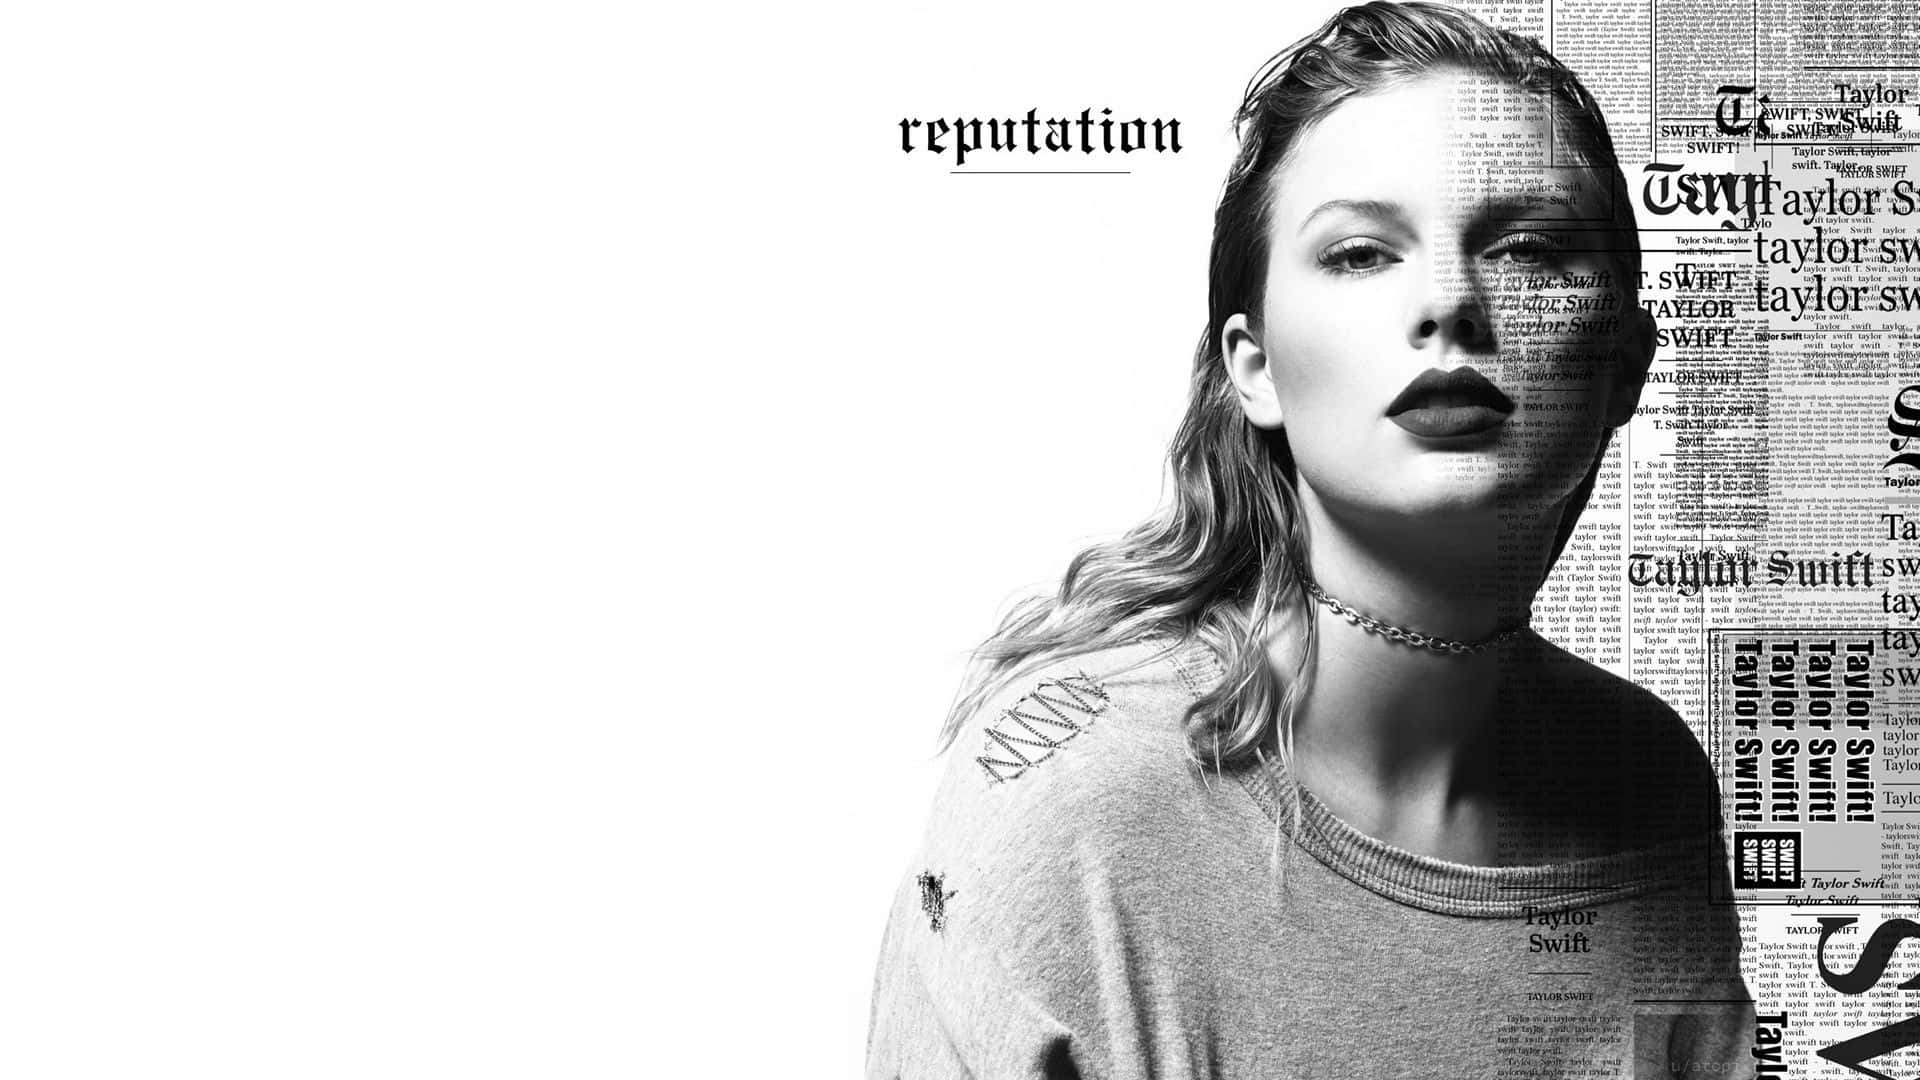 Taylorswift Reputation Album Cover Baggrund.